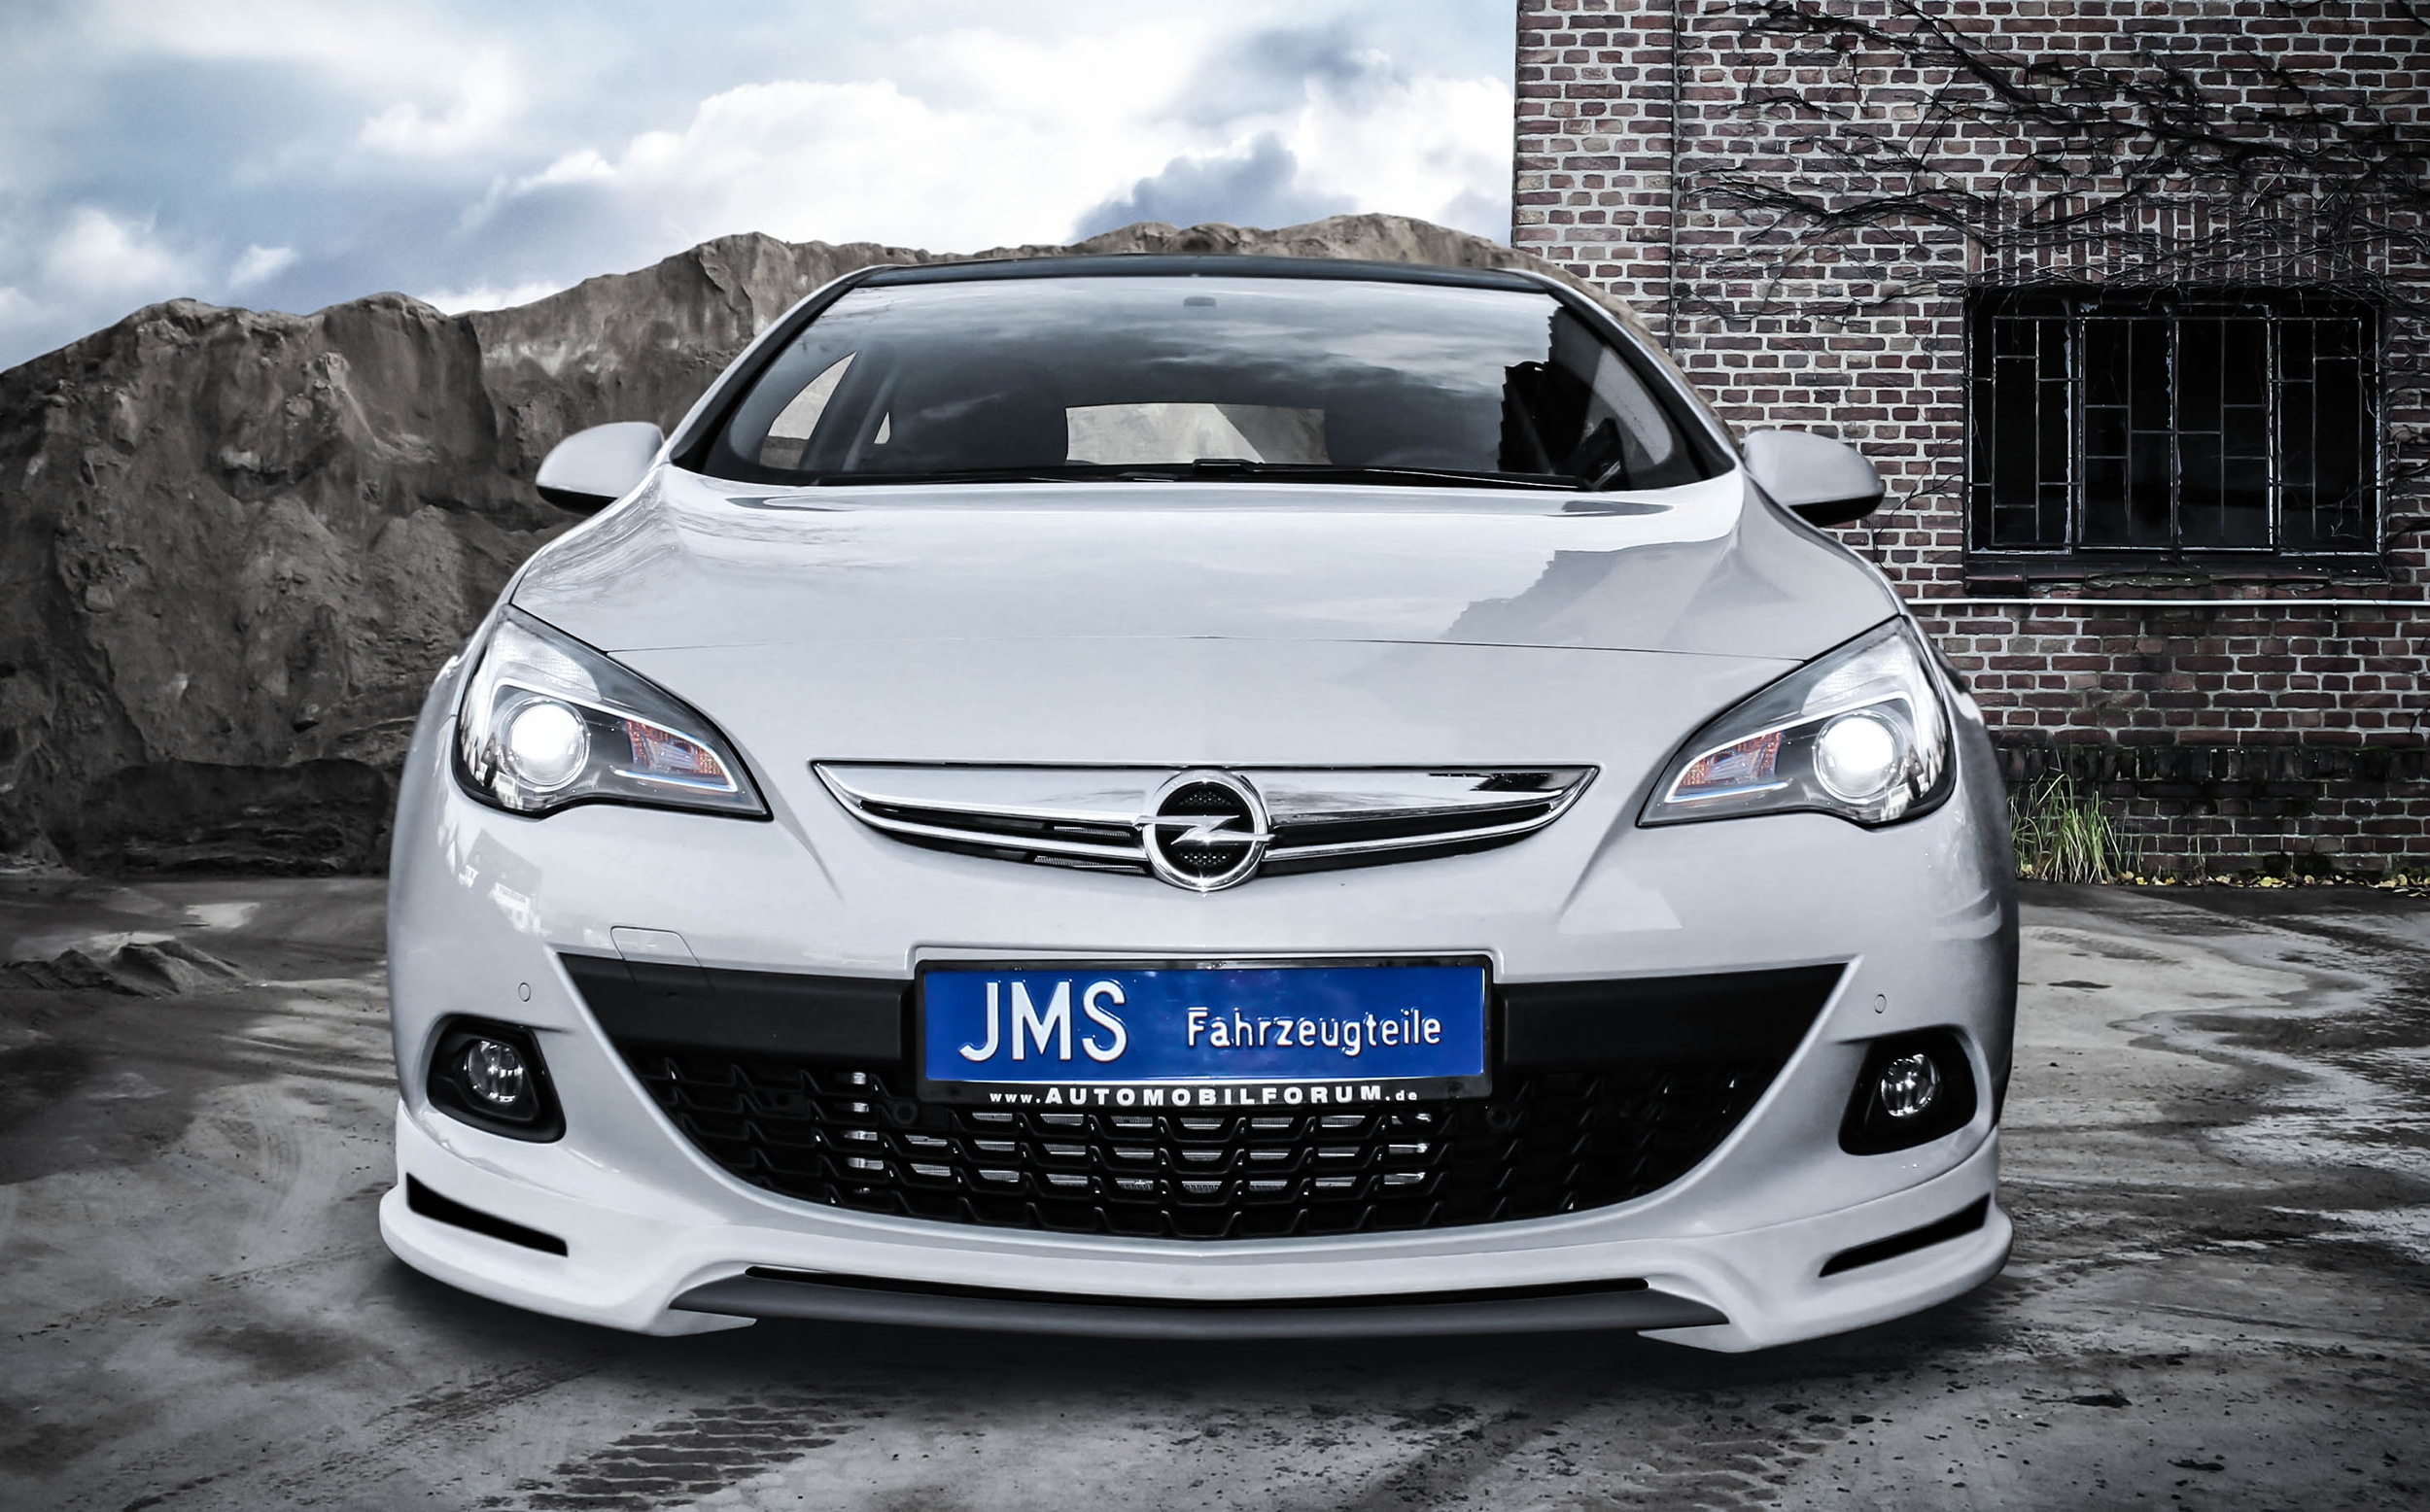 Запчасти автотюнинга. Тюнинг Opel Astra J (2009-2015)